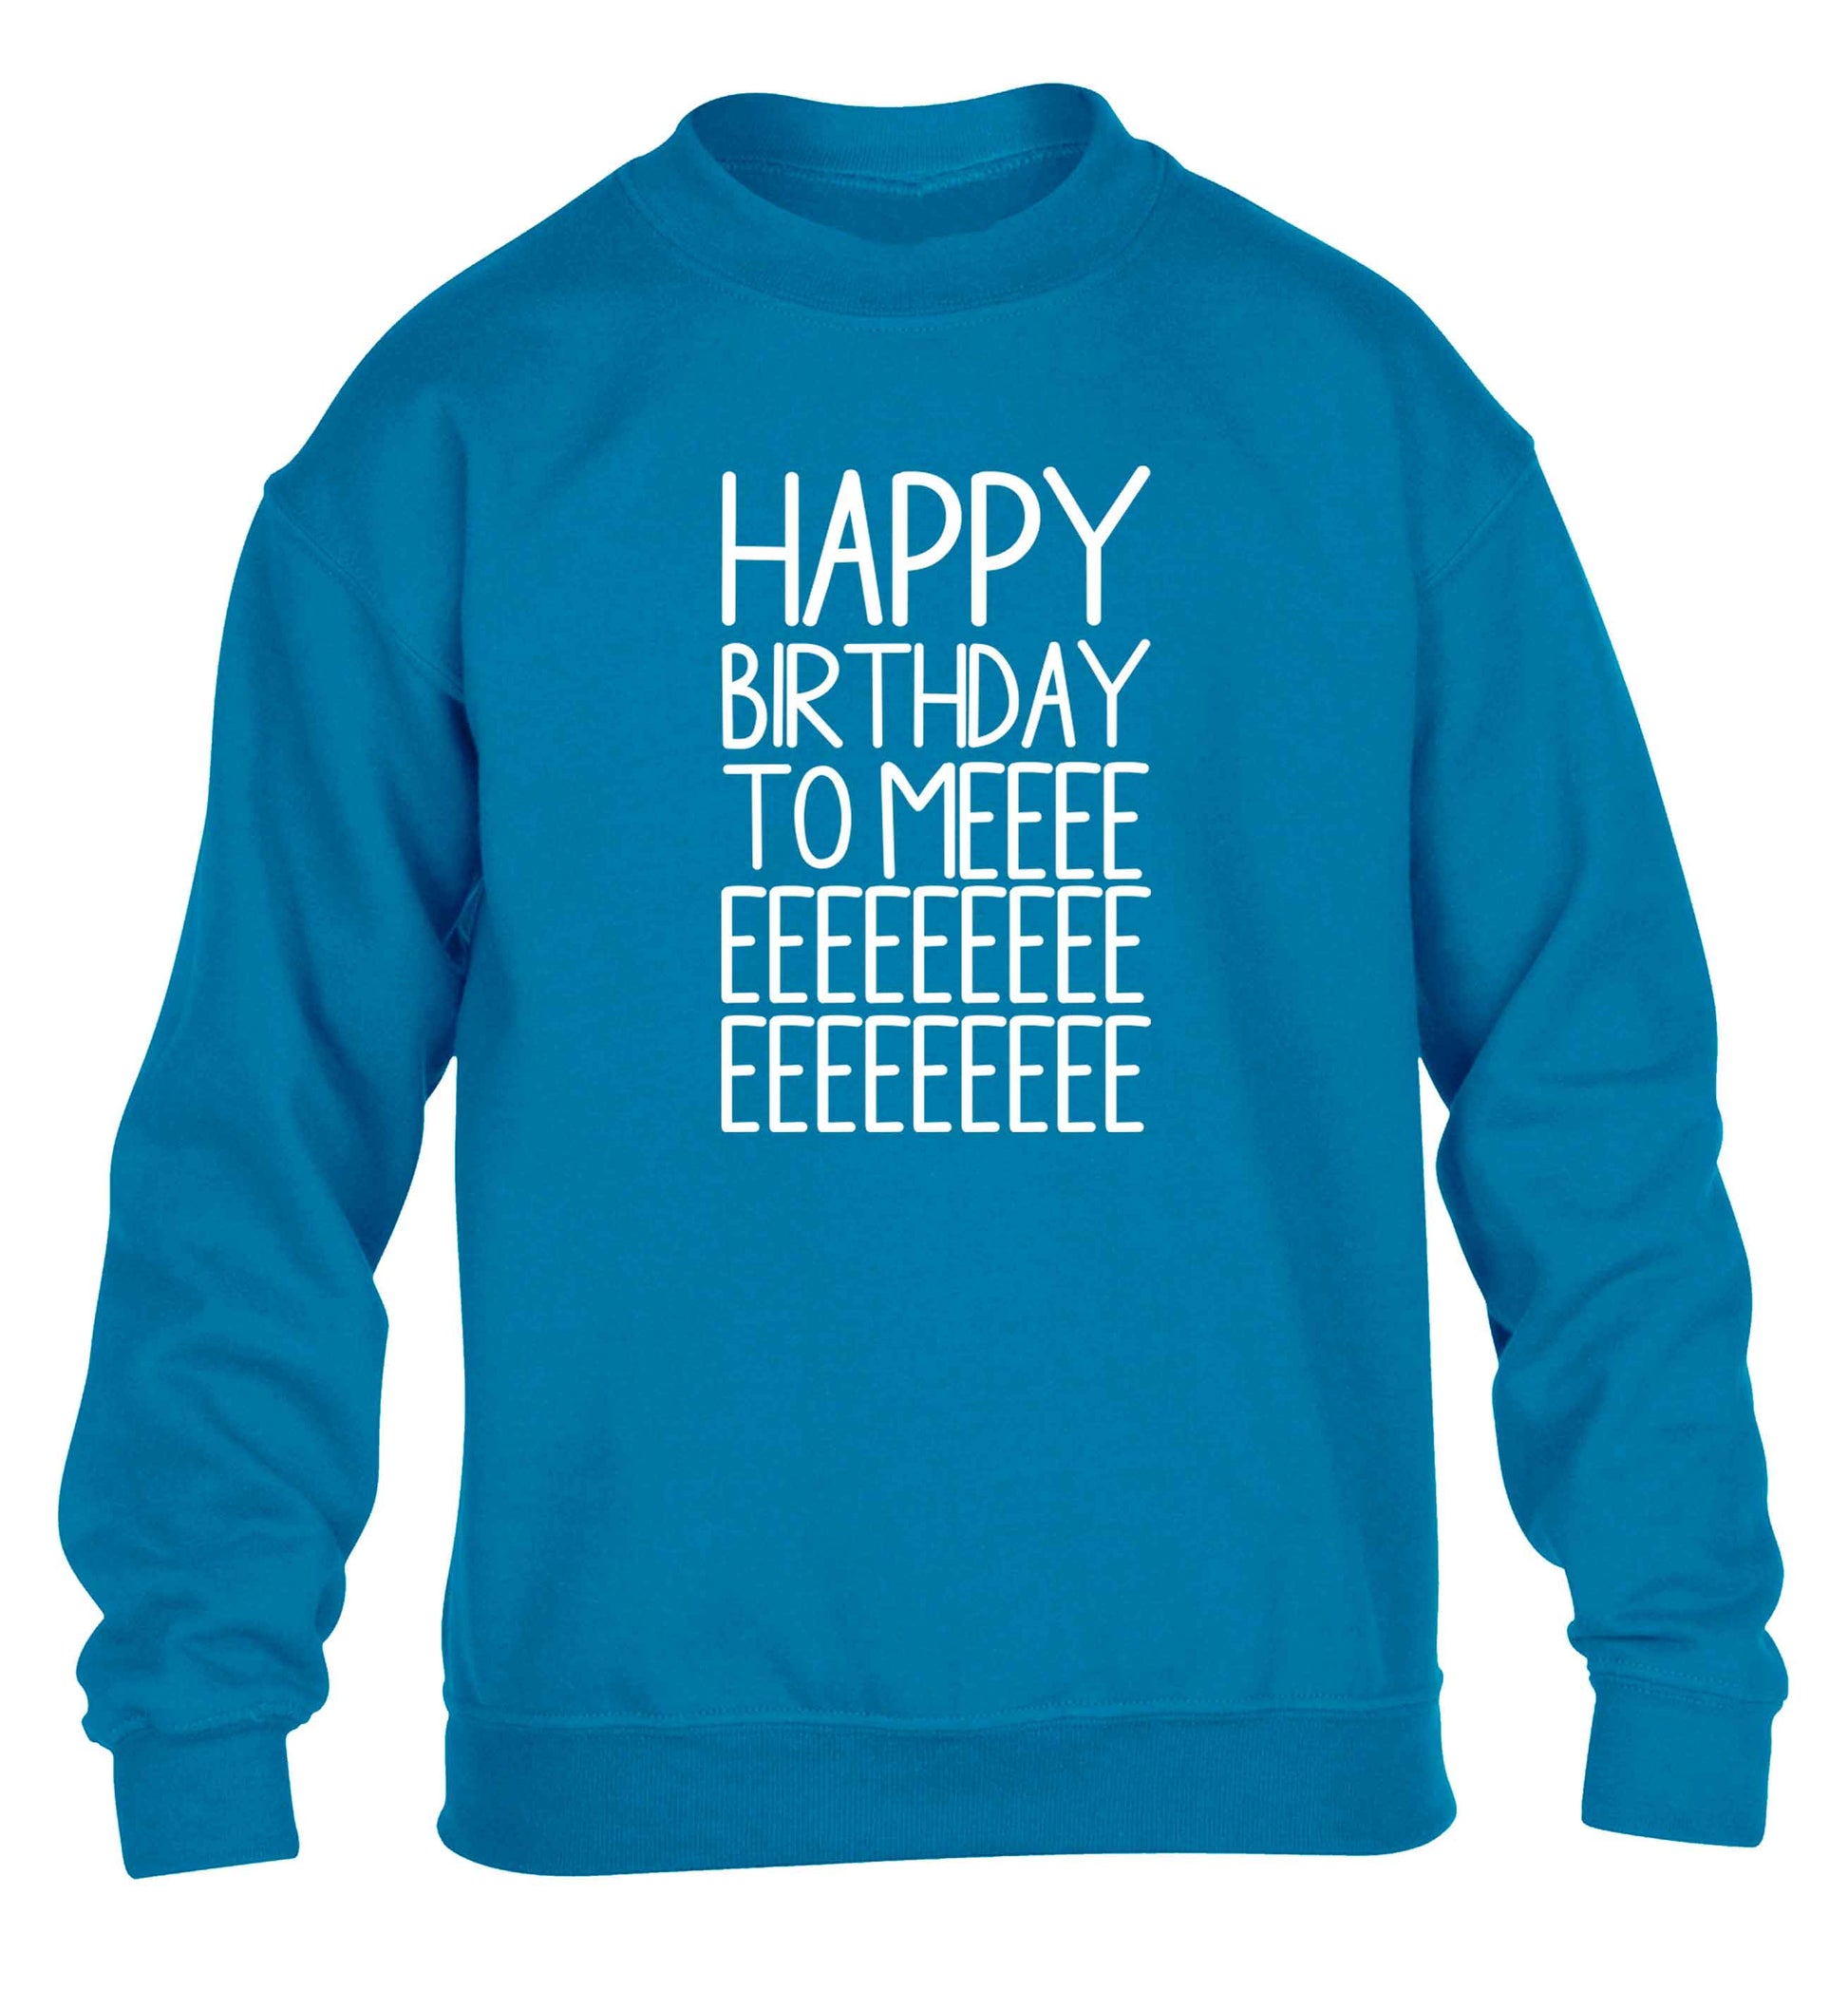 Happy birthday to me children's blue sweater 12-13 Years